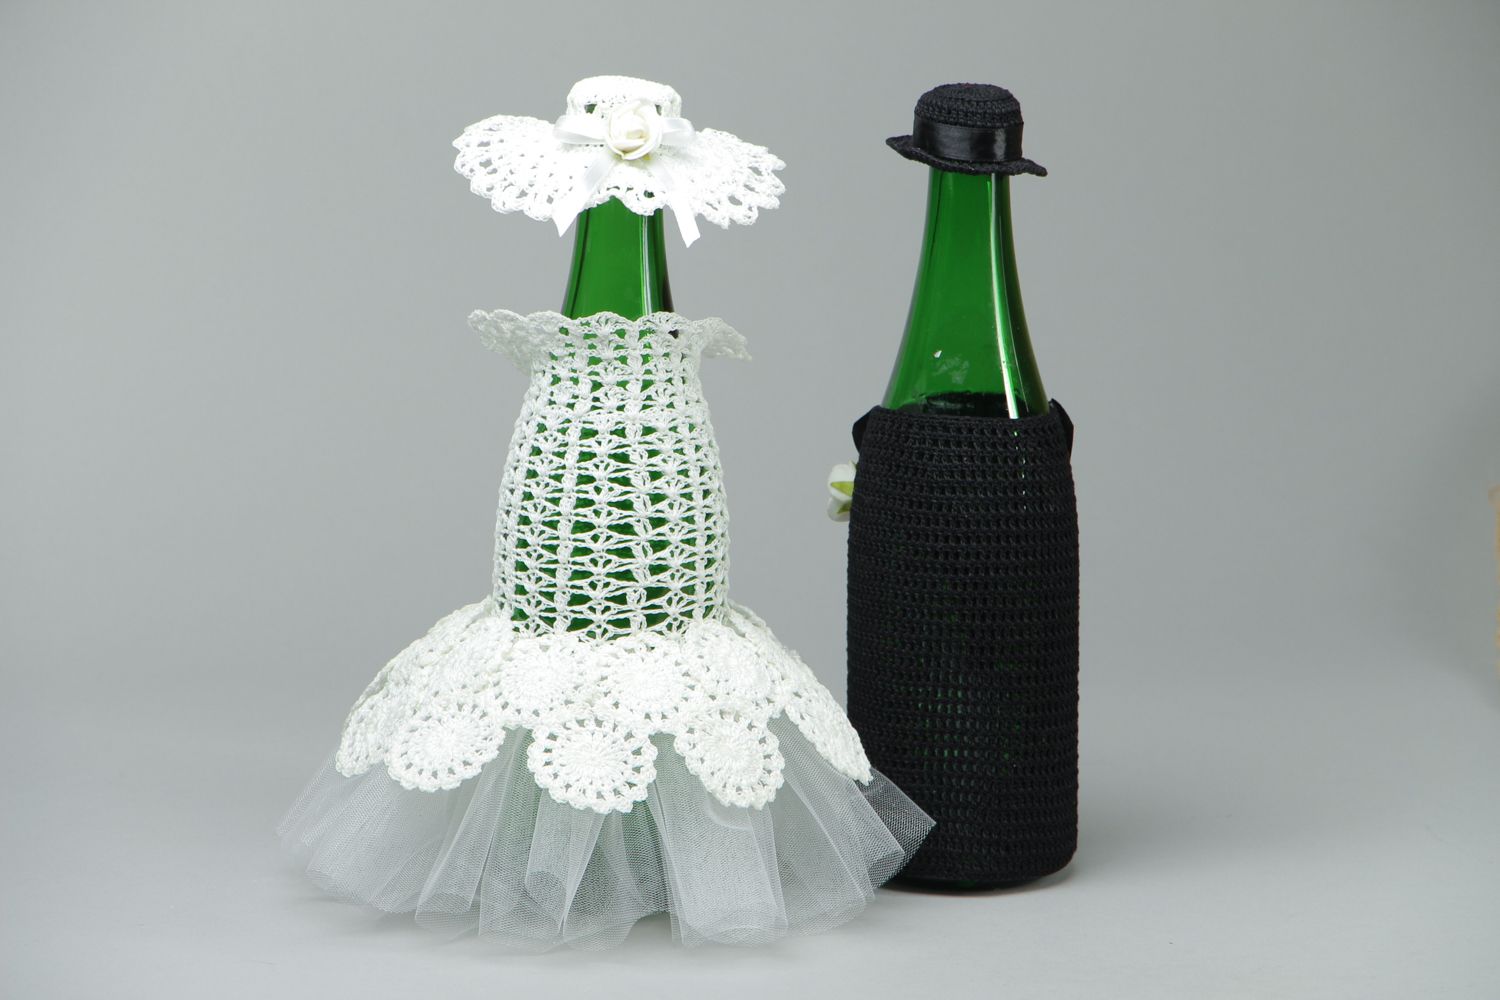 Crochet champagne bottle covers photo 3